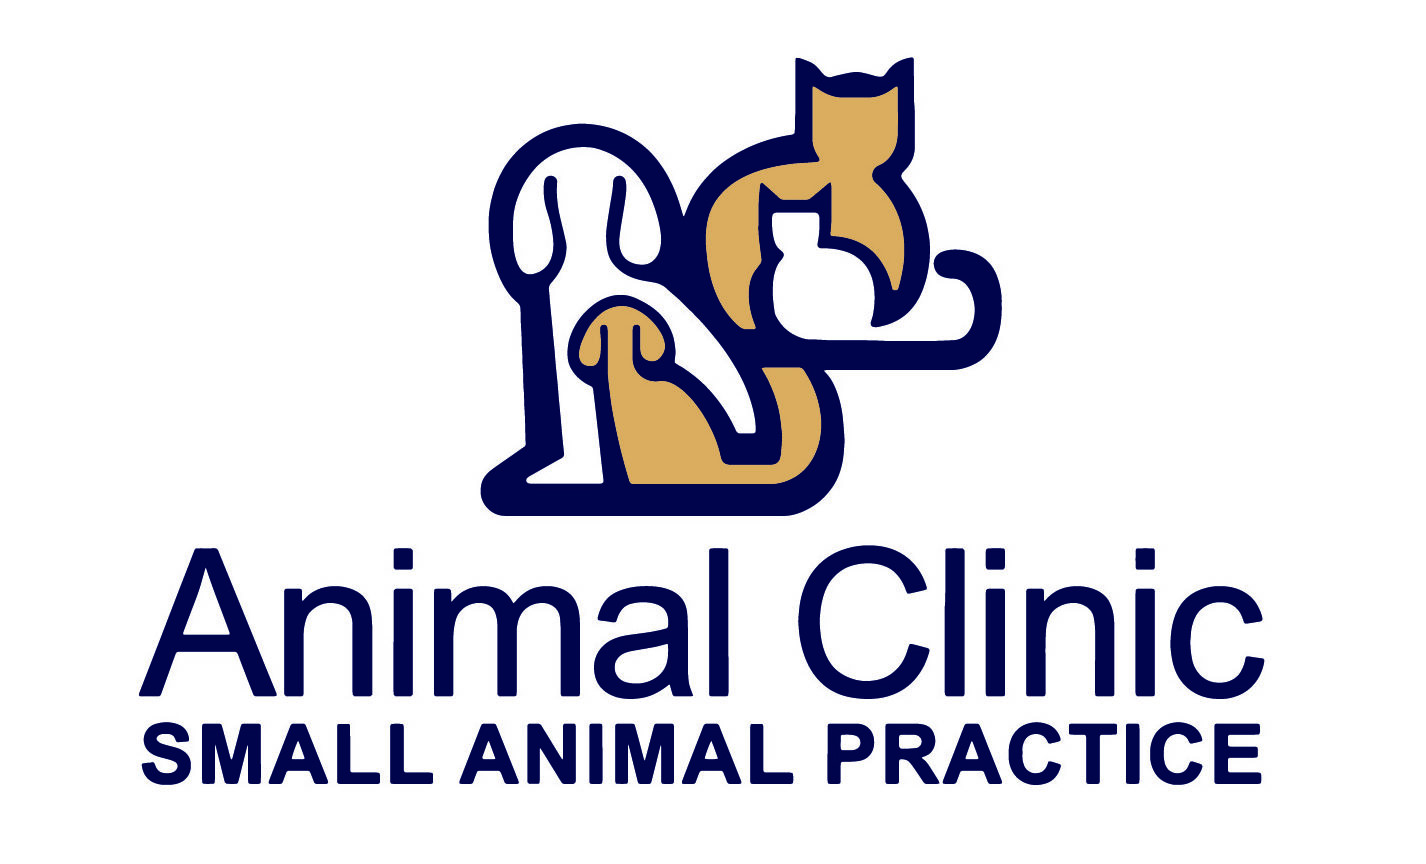 Animal Clinic Small Animal Practice